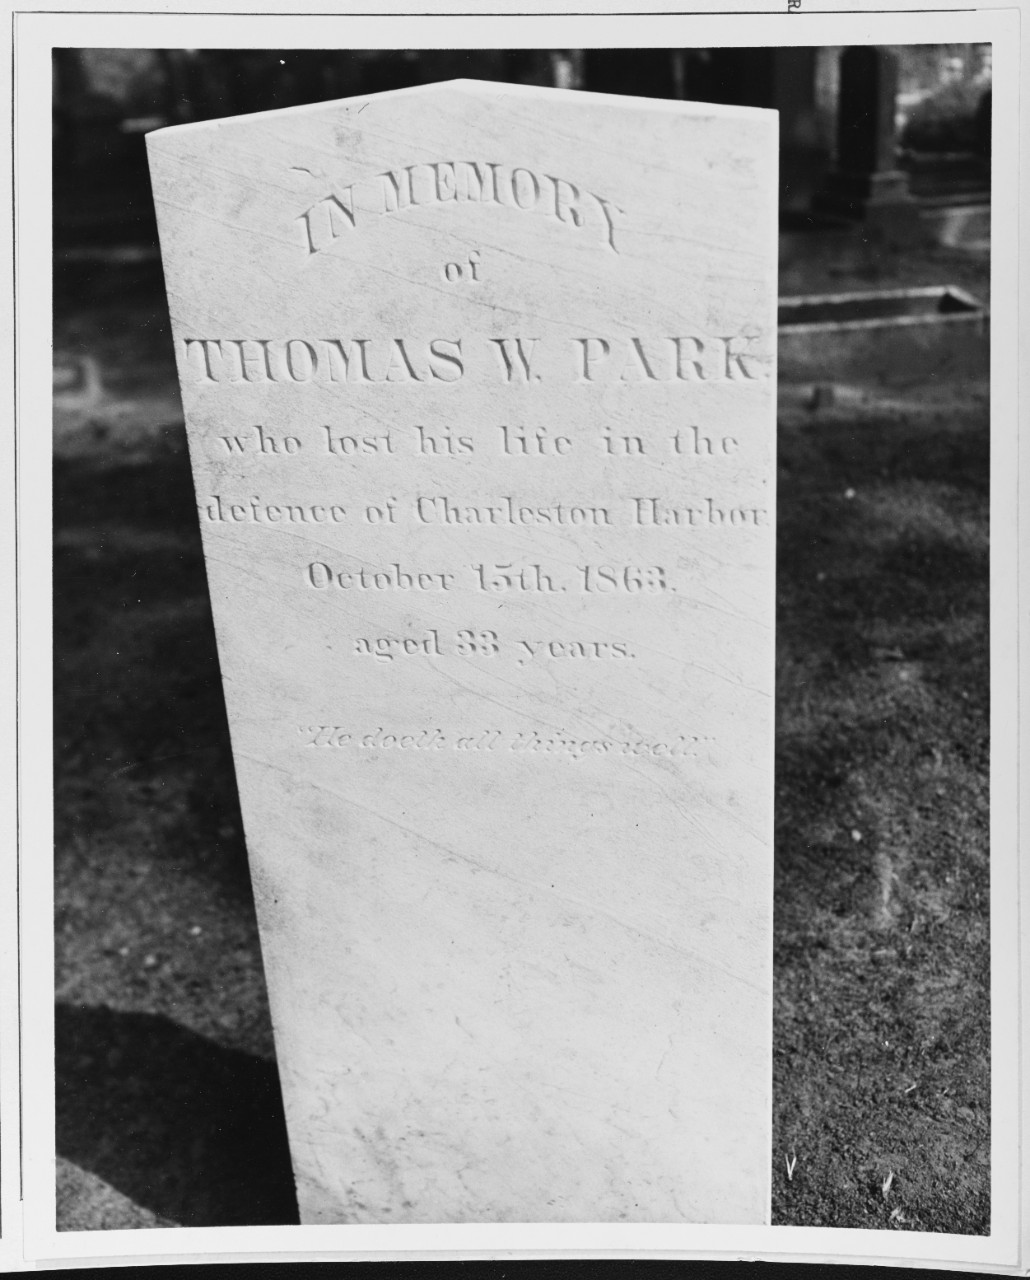 Gravemarker of Thomas W. Parks